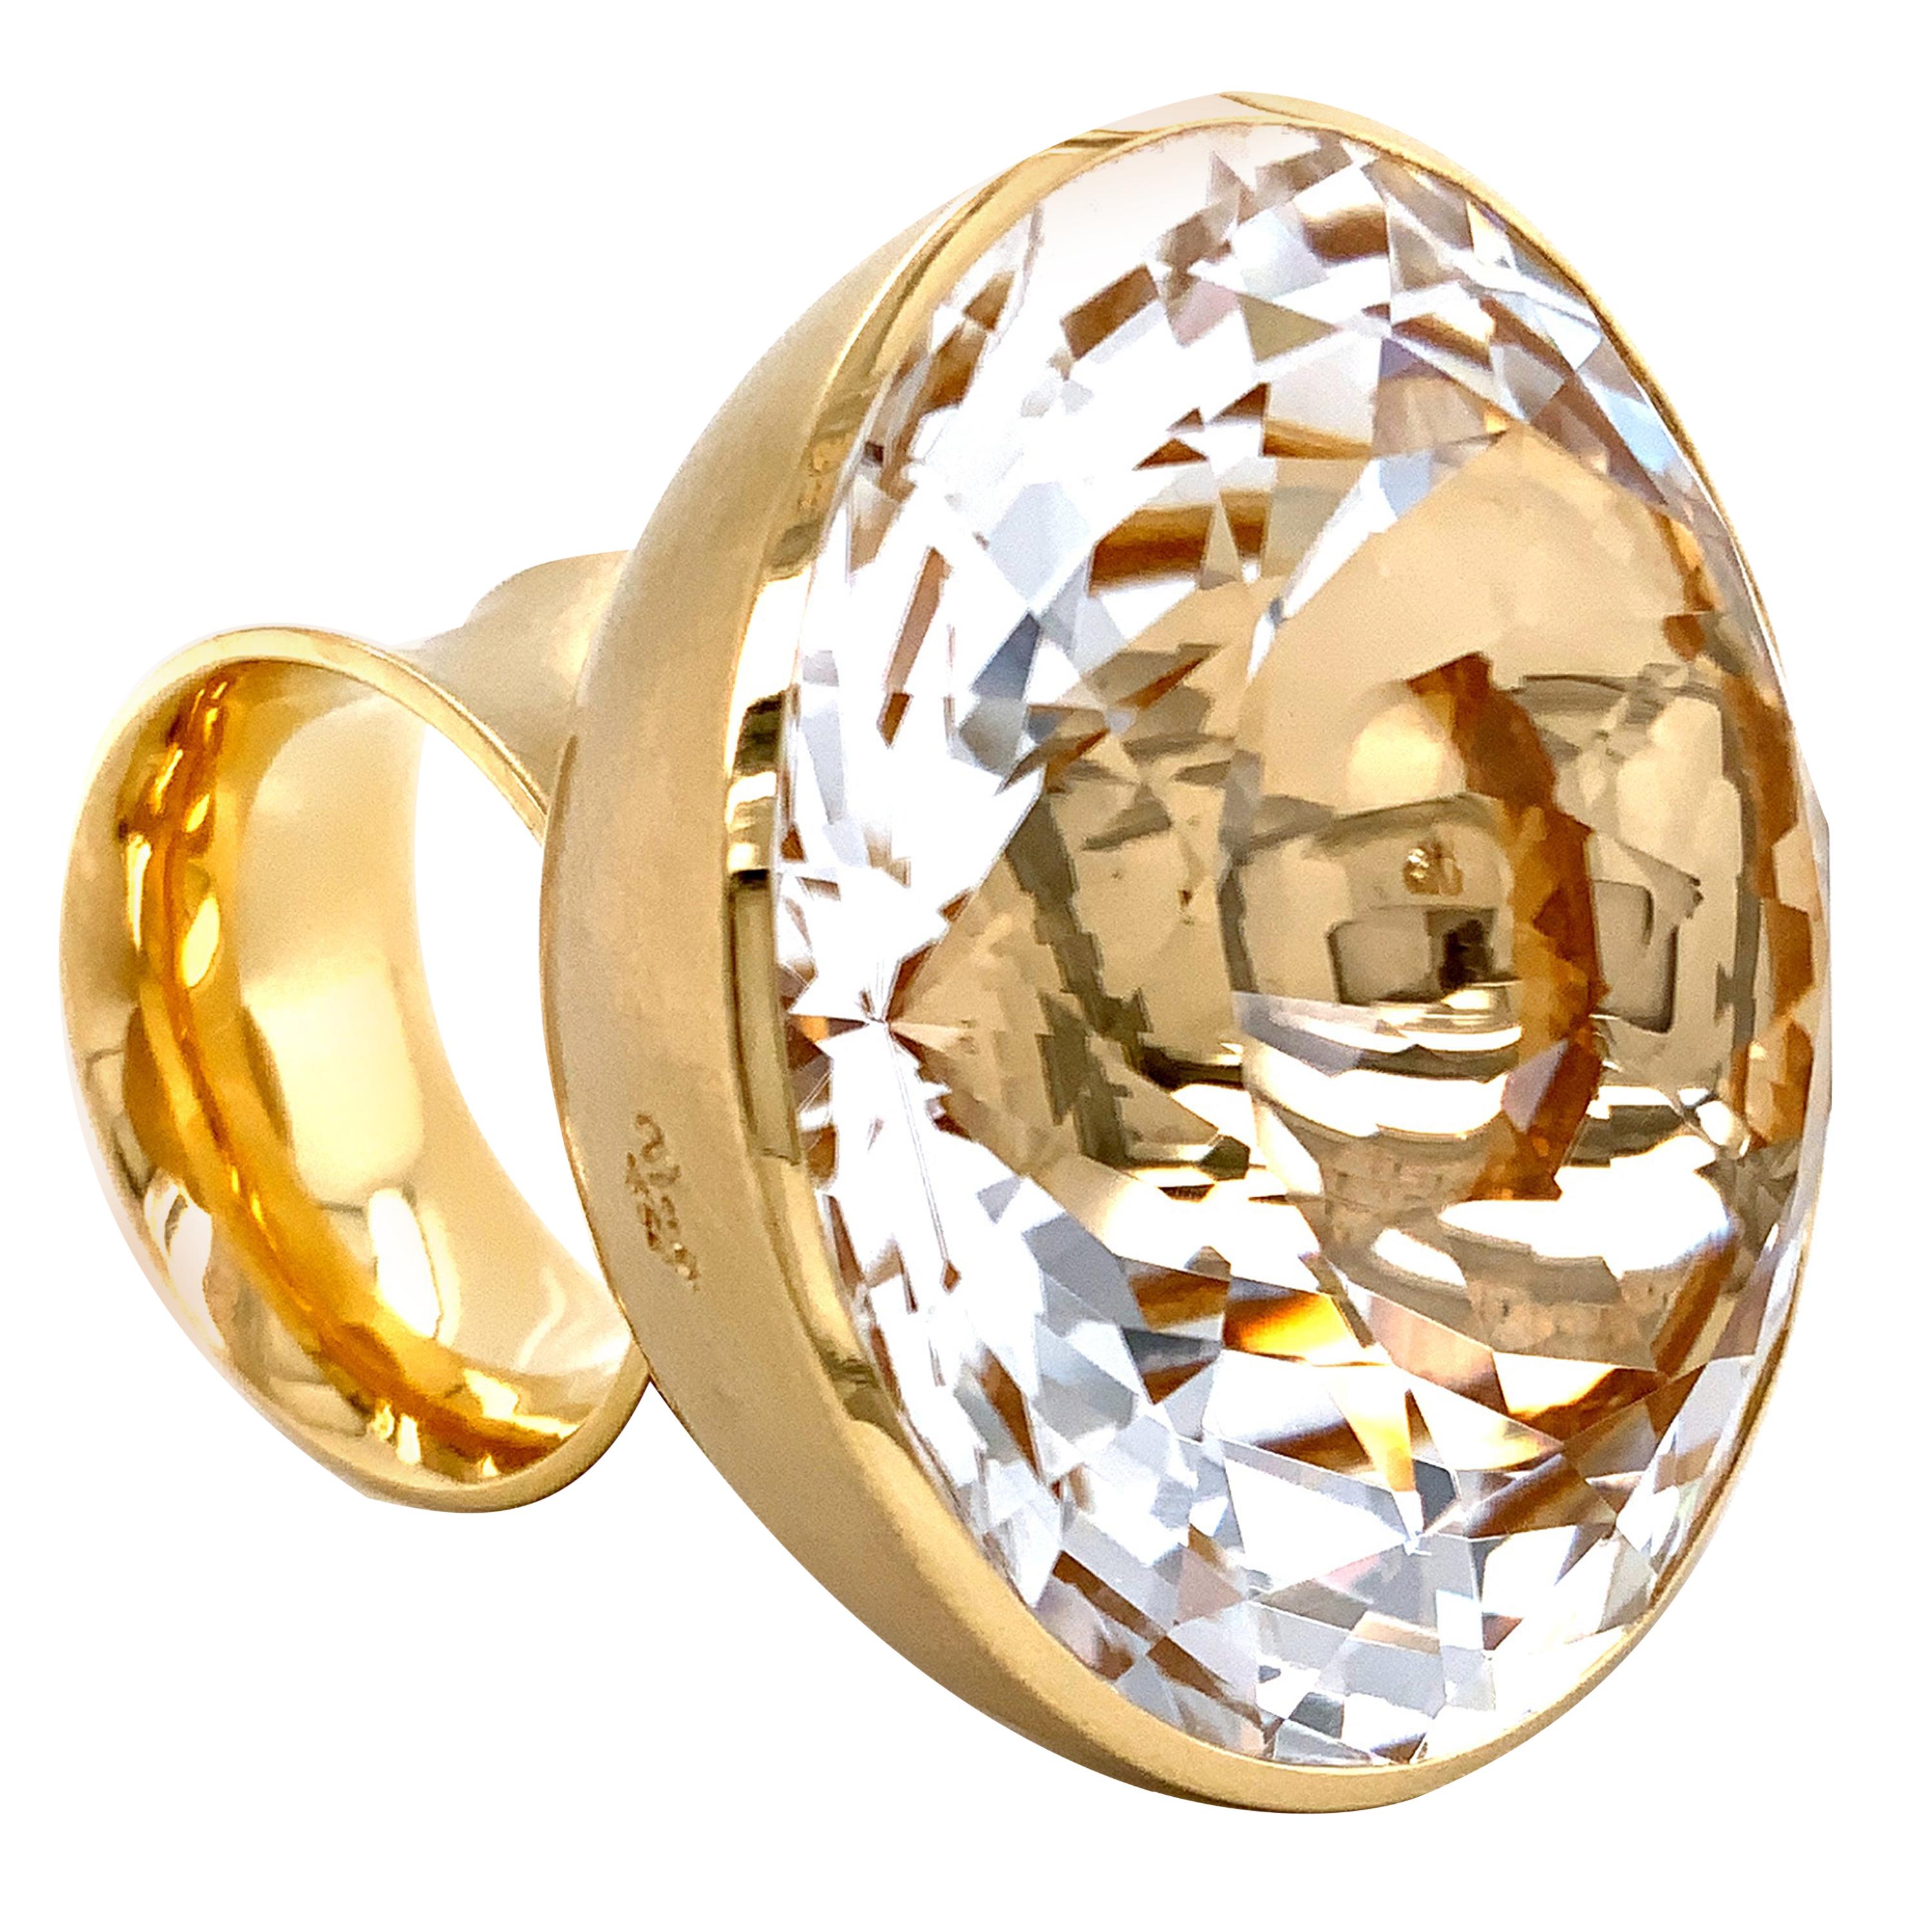  Georg Spreng - Blub Ring 18 Karat Yellow Gold, Round Natural Rock Crystal 38 mm For Sale